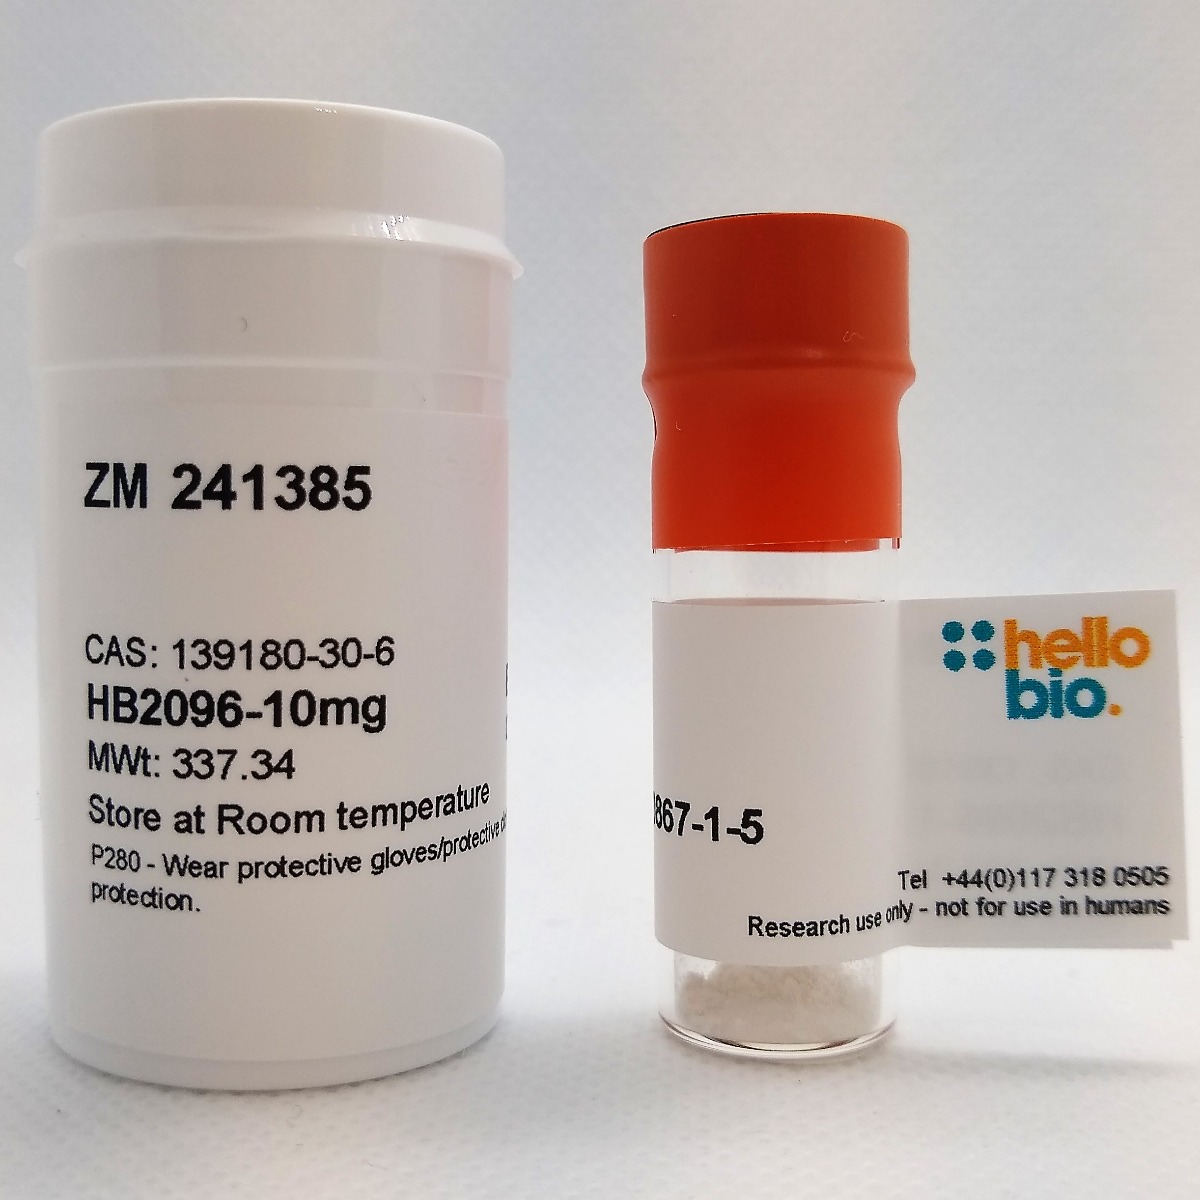 ZM 241385 product vial image | Hello Bio